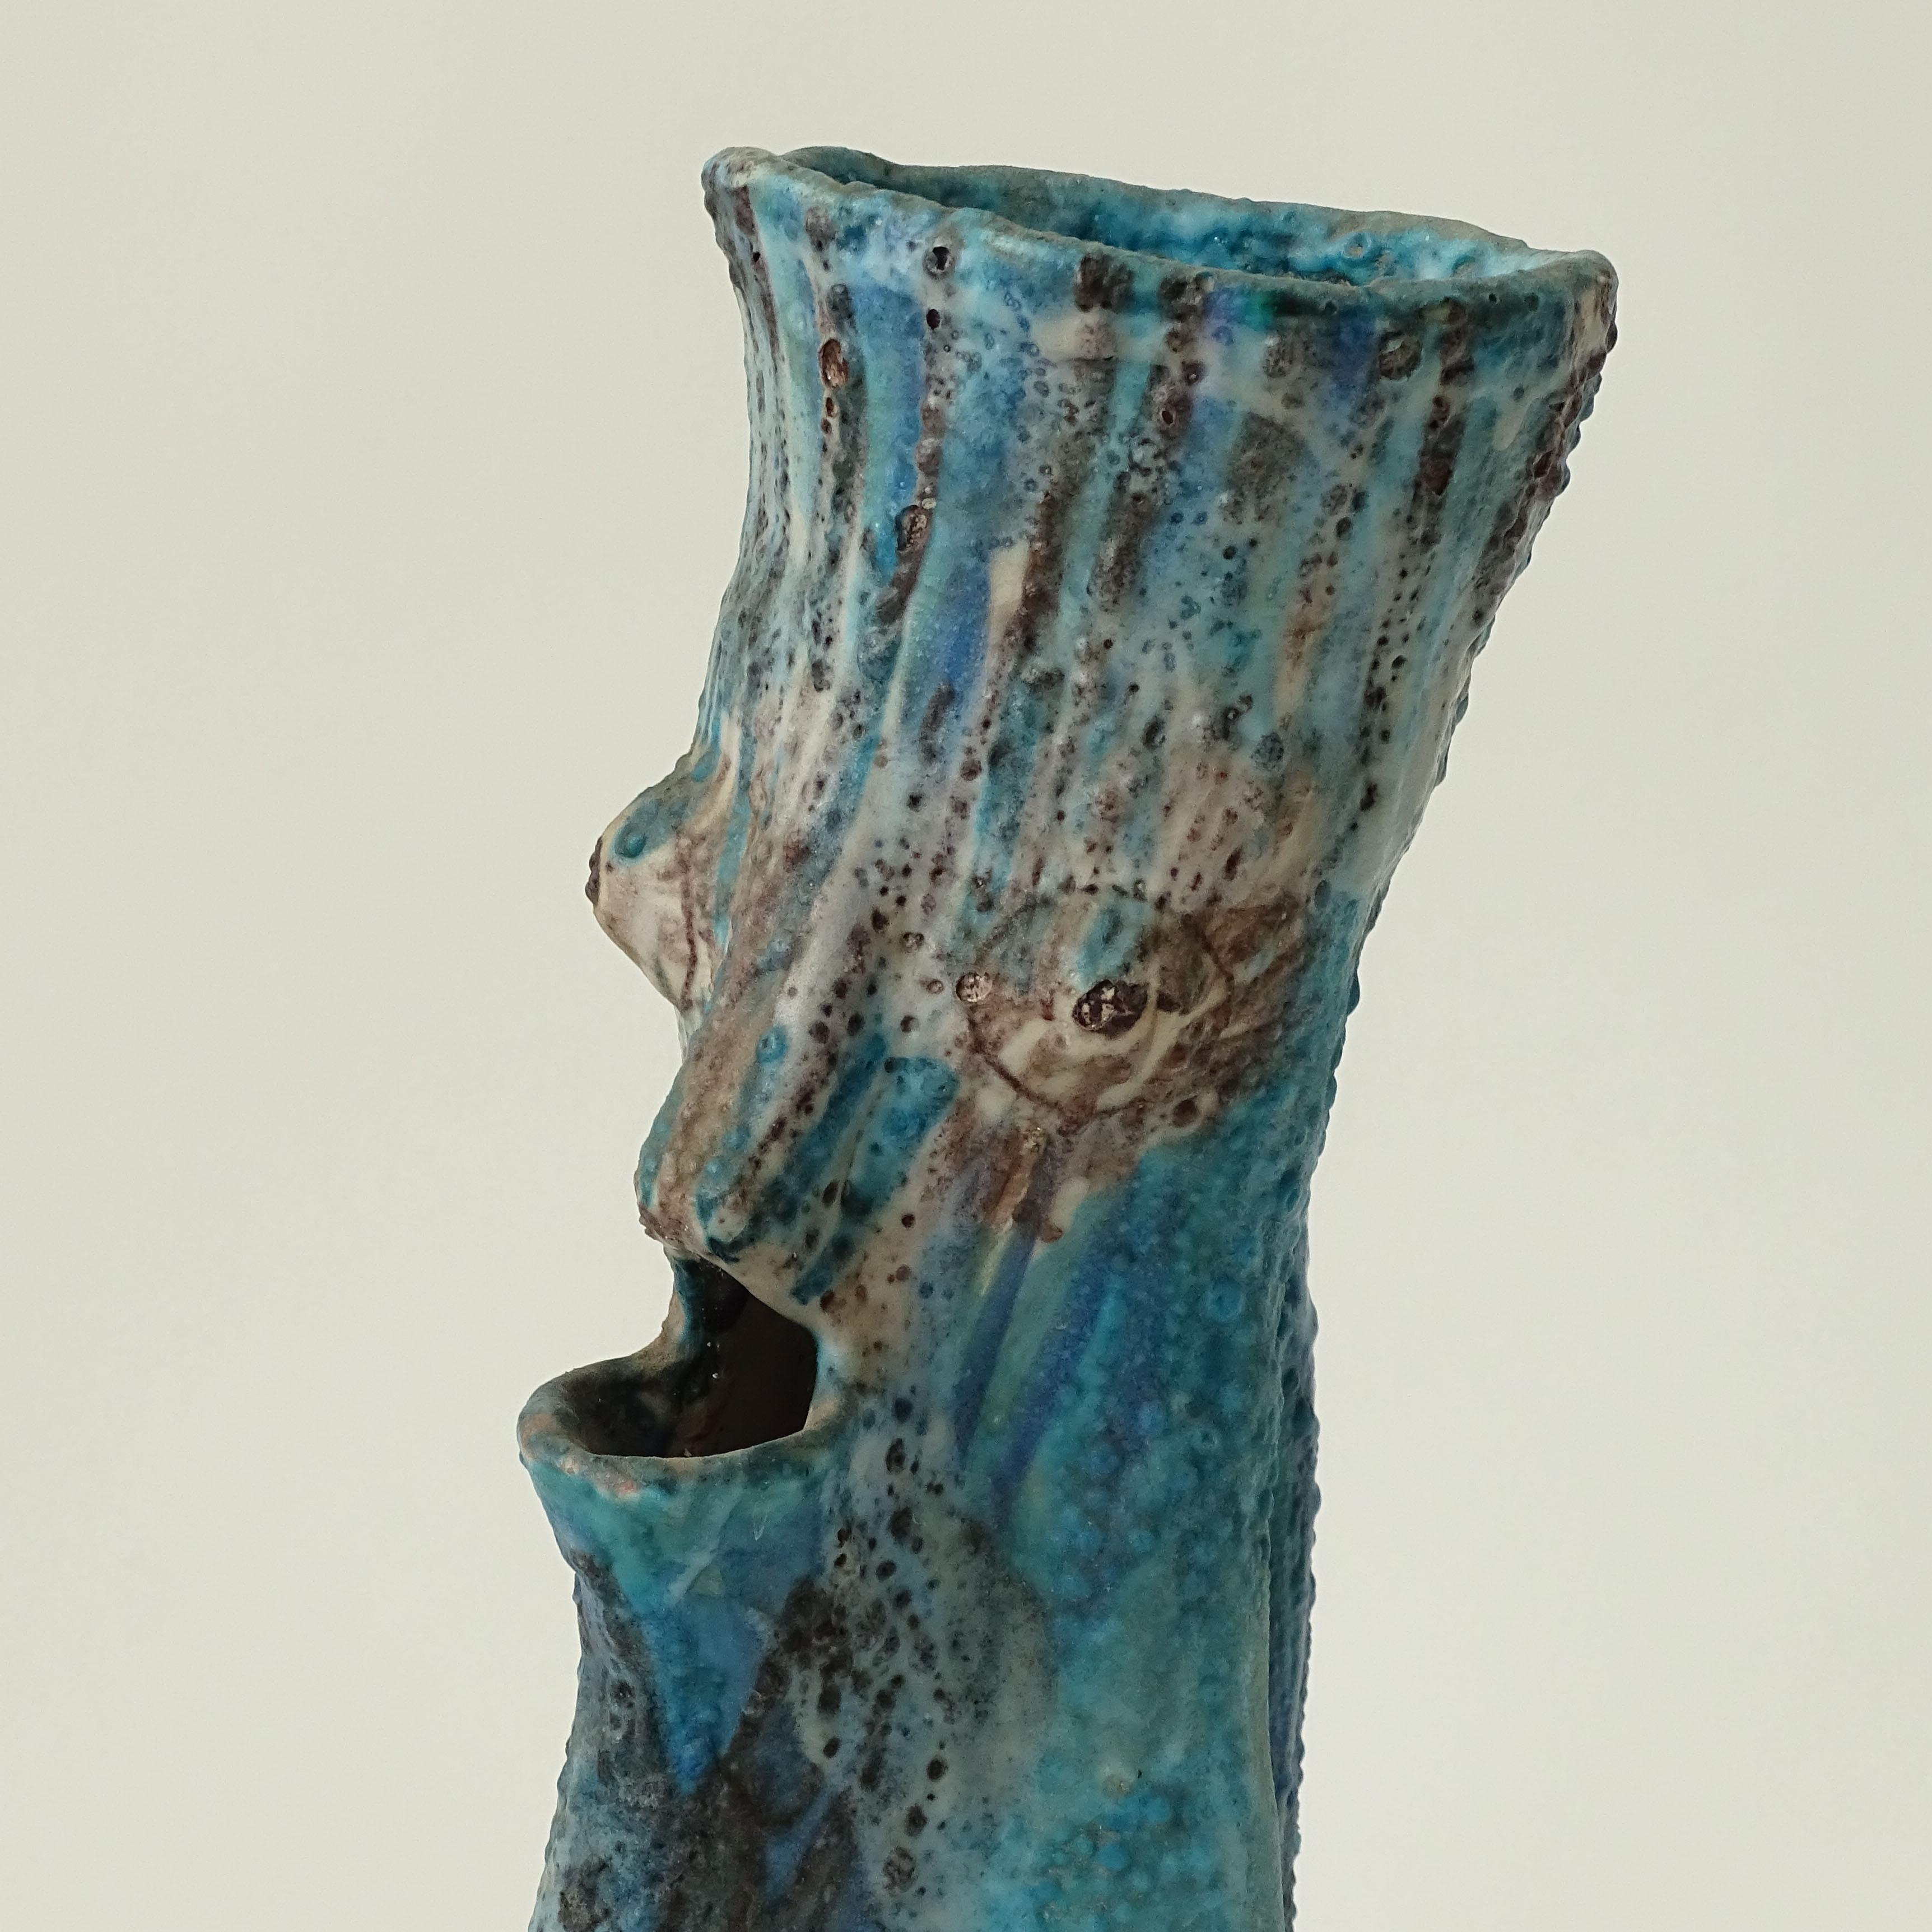 Grotesque Figural Jug-shaped Vase.
Ceramiche Artistiche Solimene, Vietri,
Earthenware, glazed turquoise blue, and purple on white.
Marked: C.A.S. VIETRI ITALY.